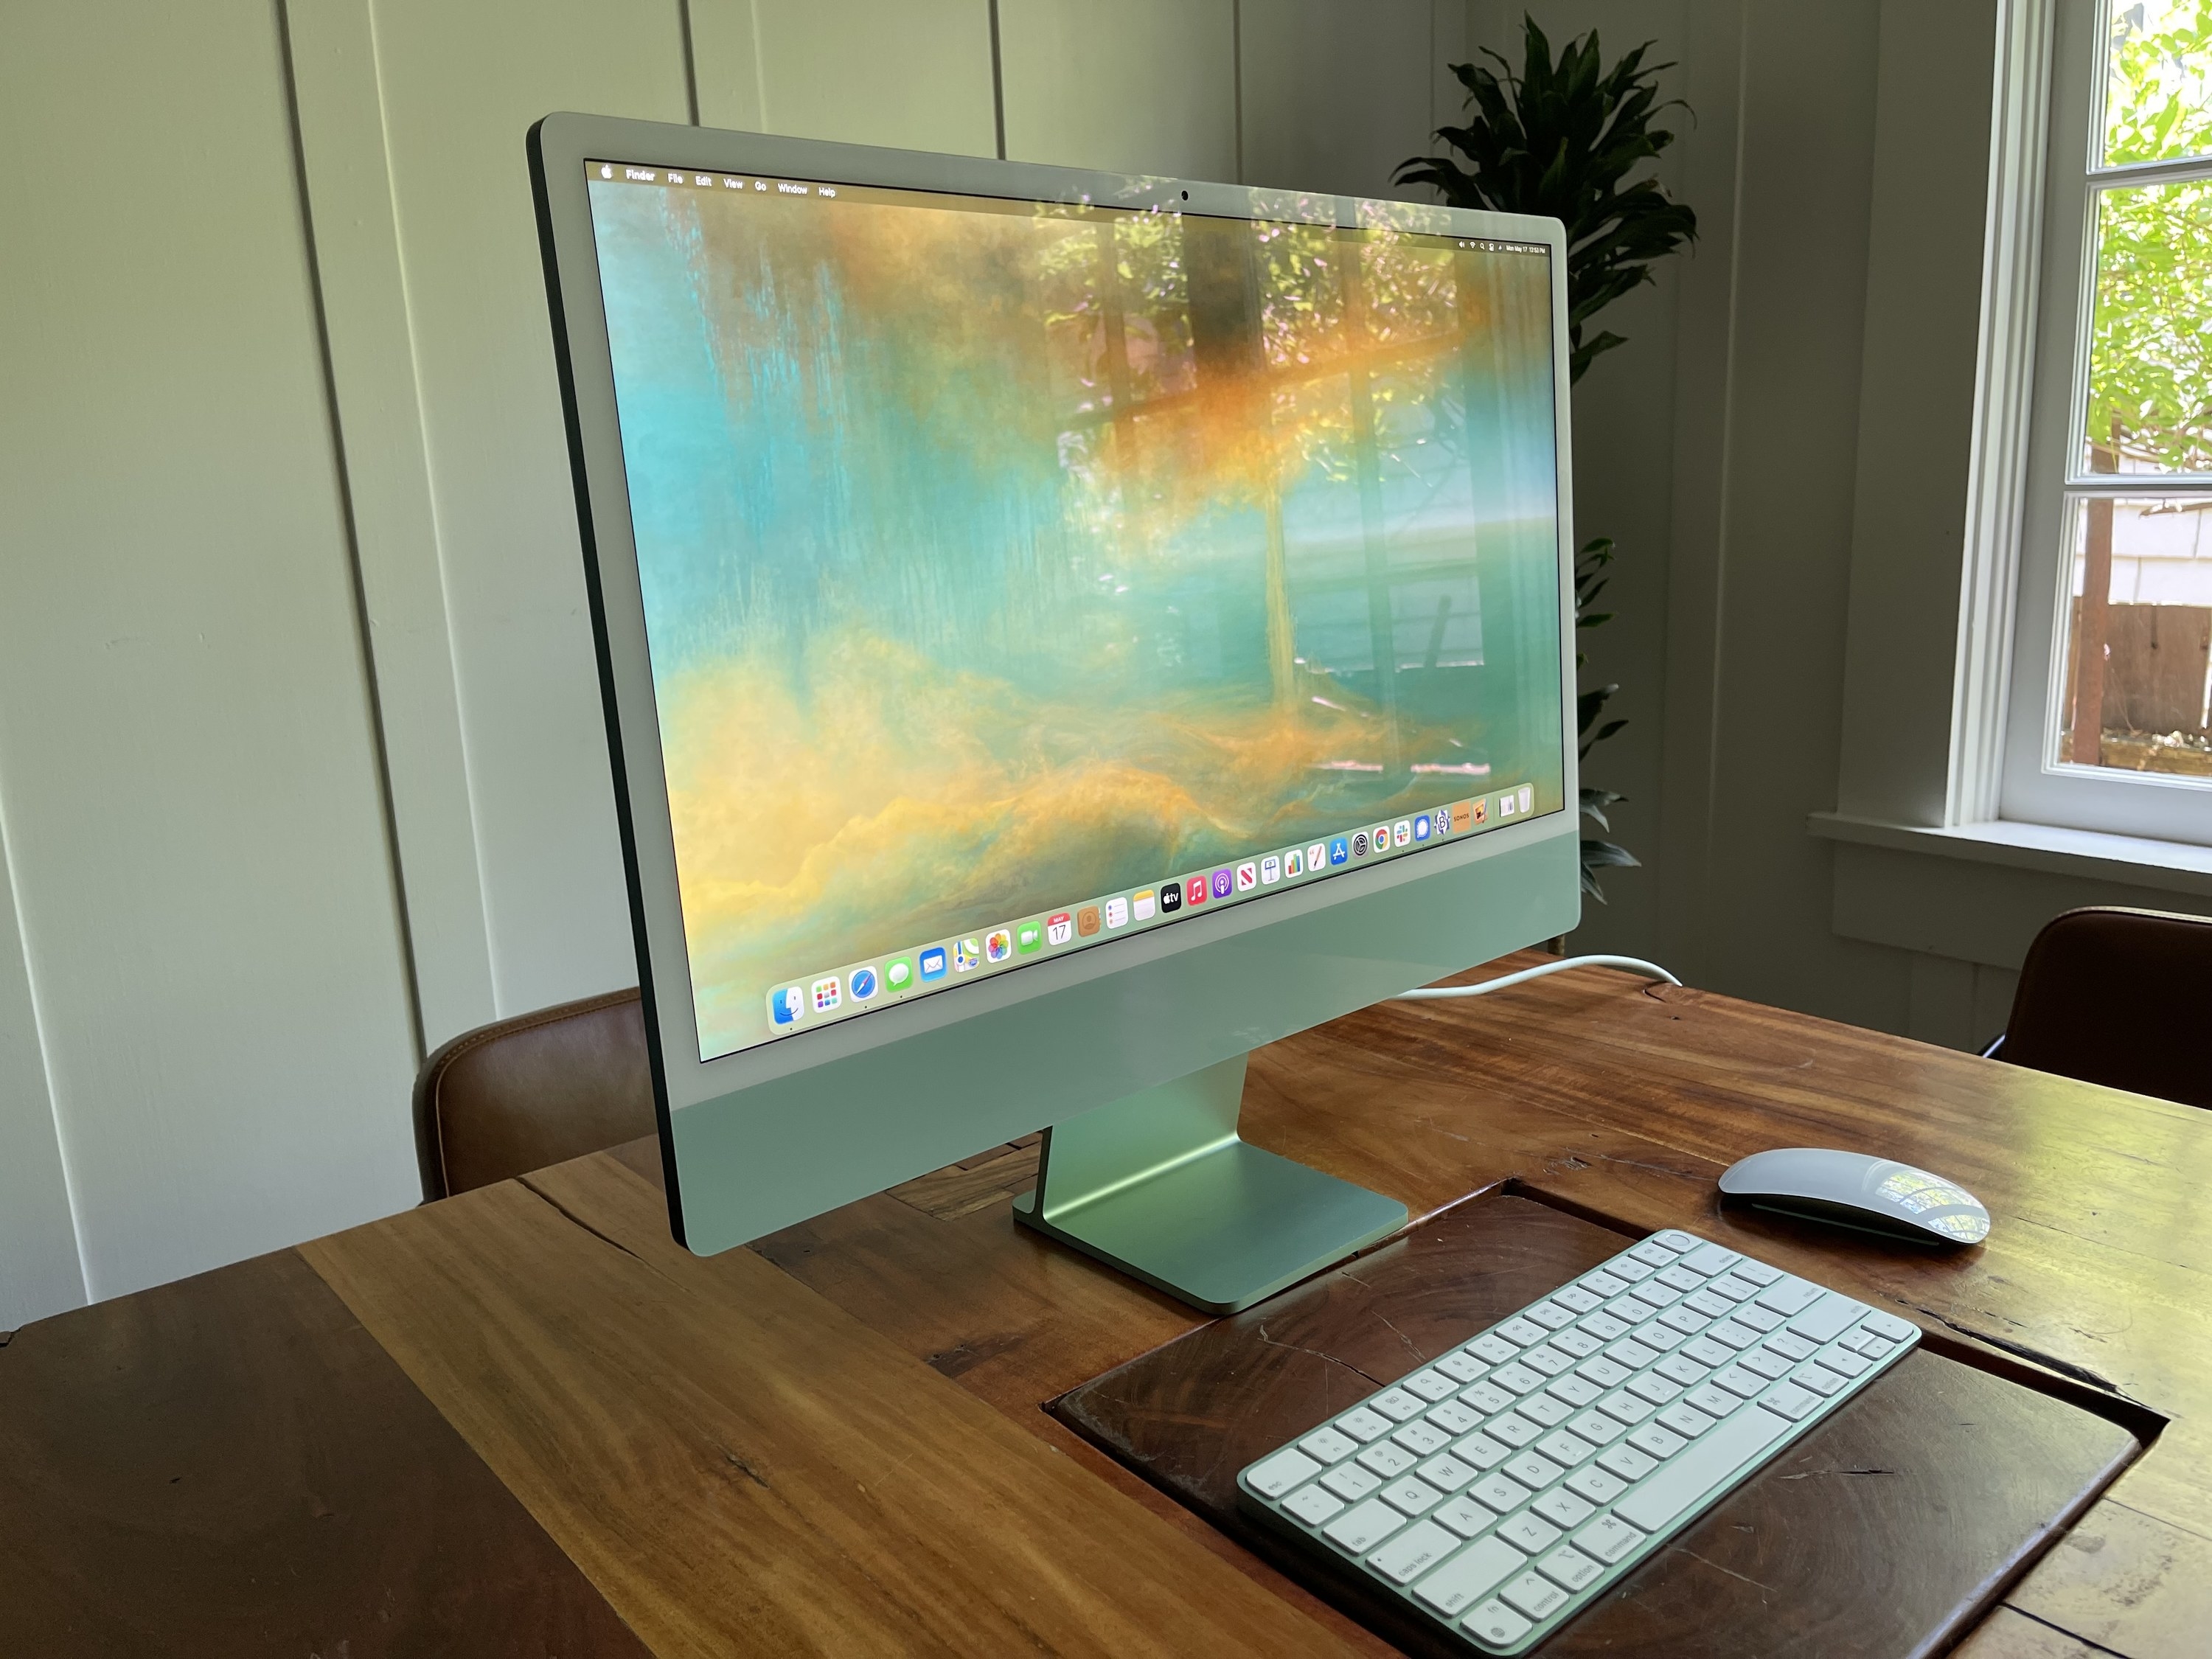 The new iMac